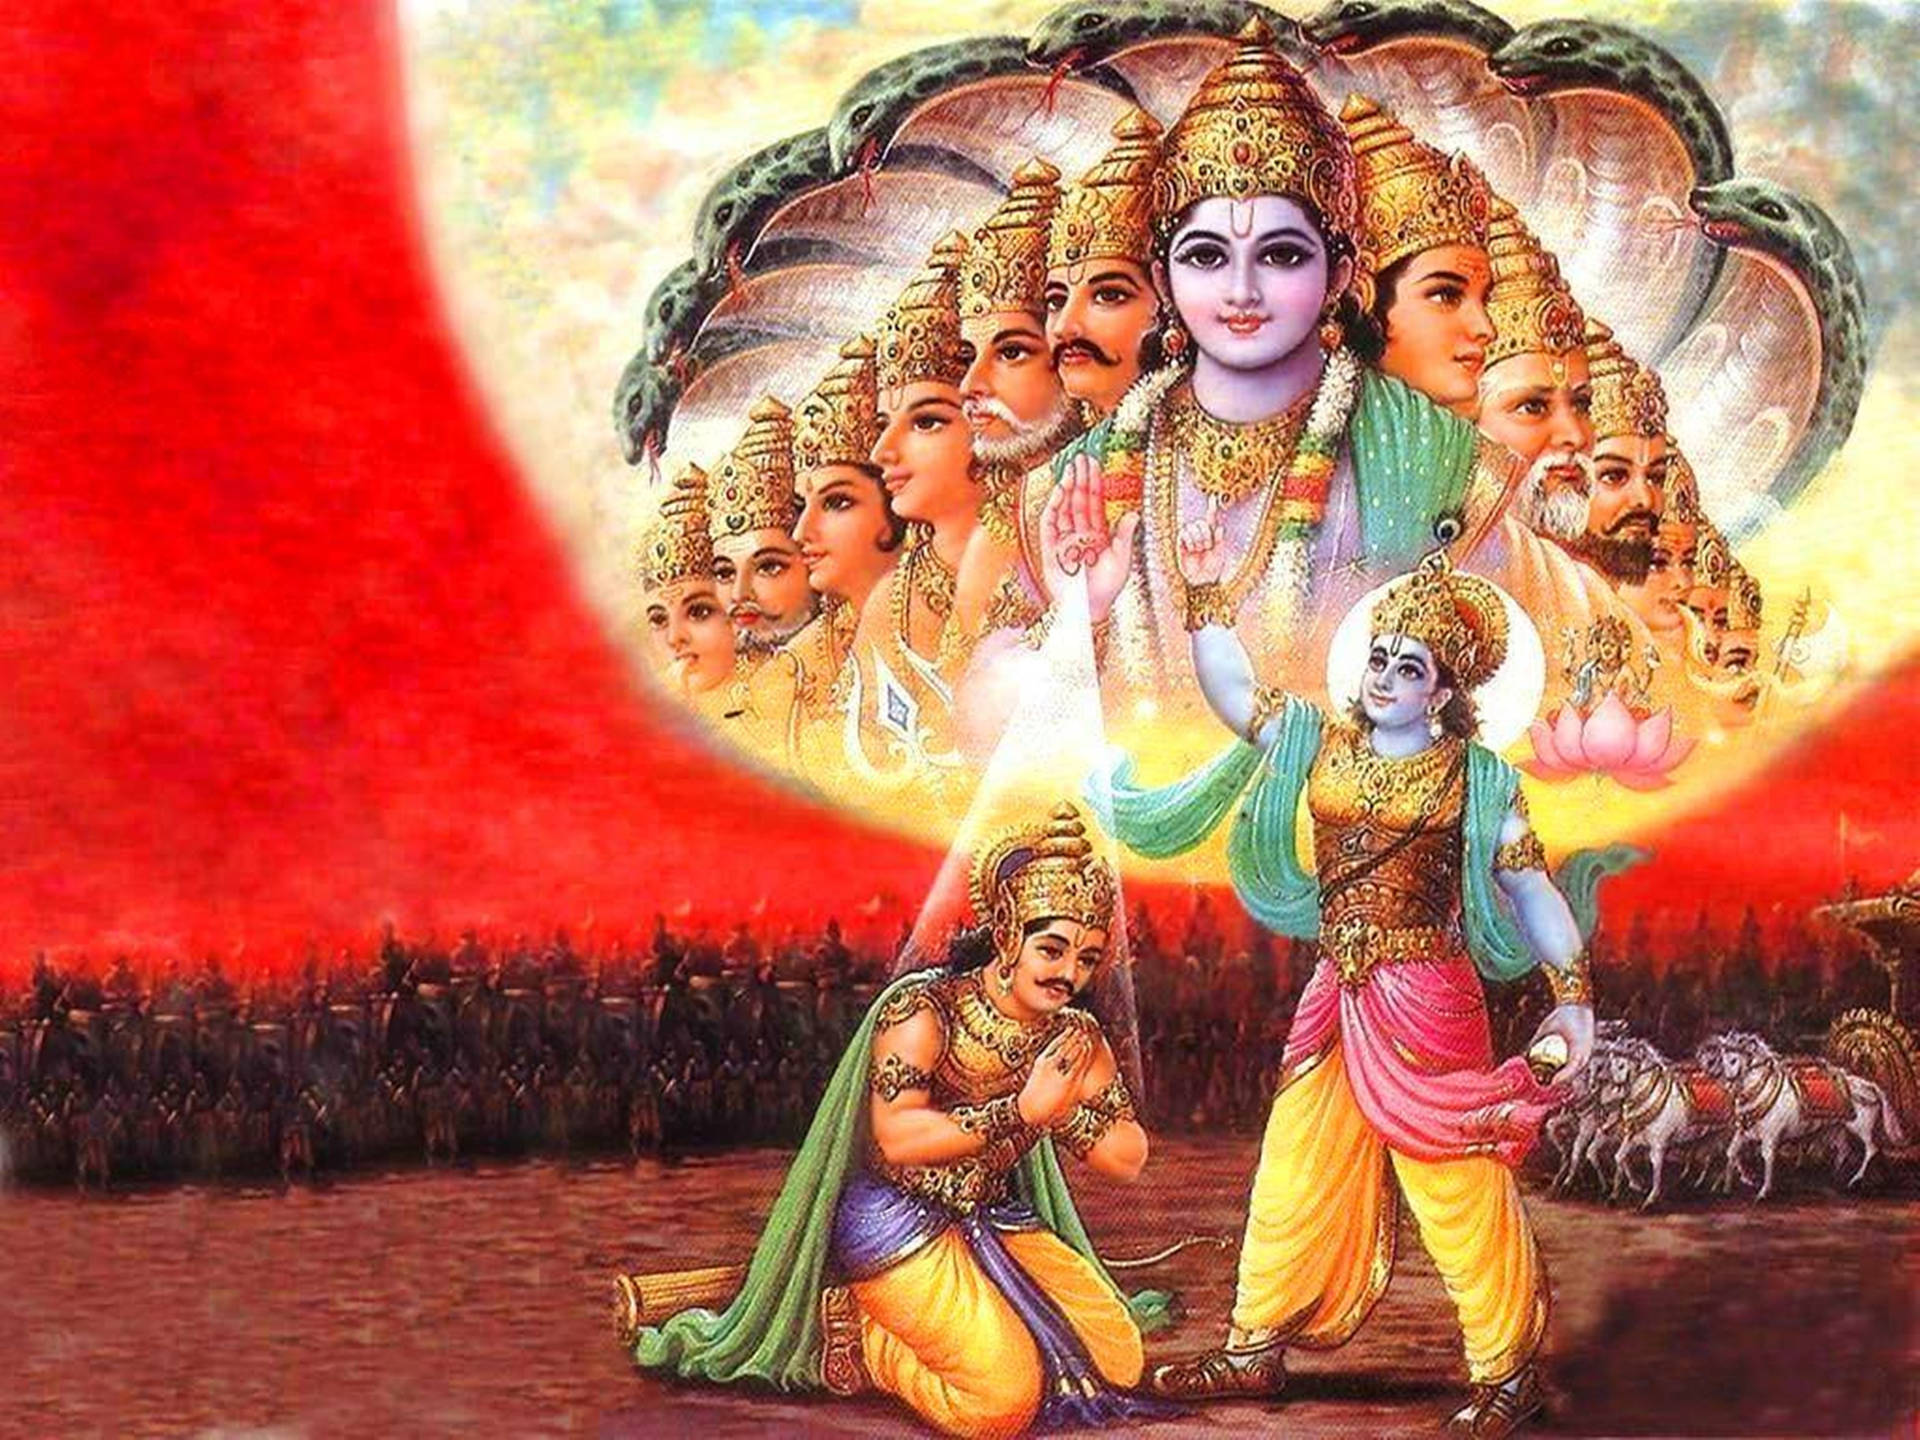 Lordkrishna 4k Und Arjuna Mahabharata Krieg Wallpaper